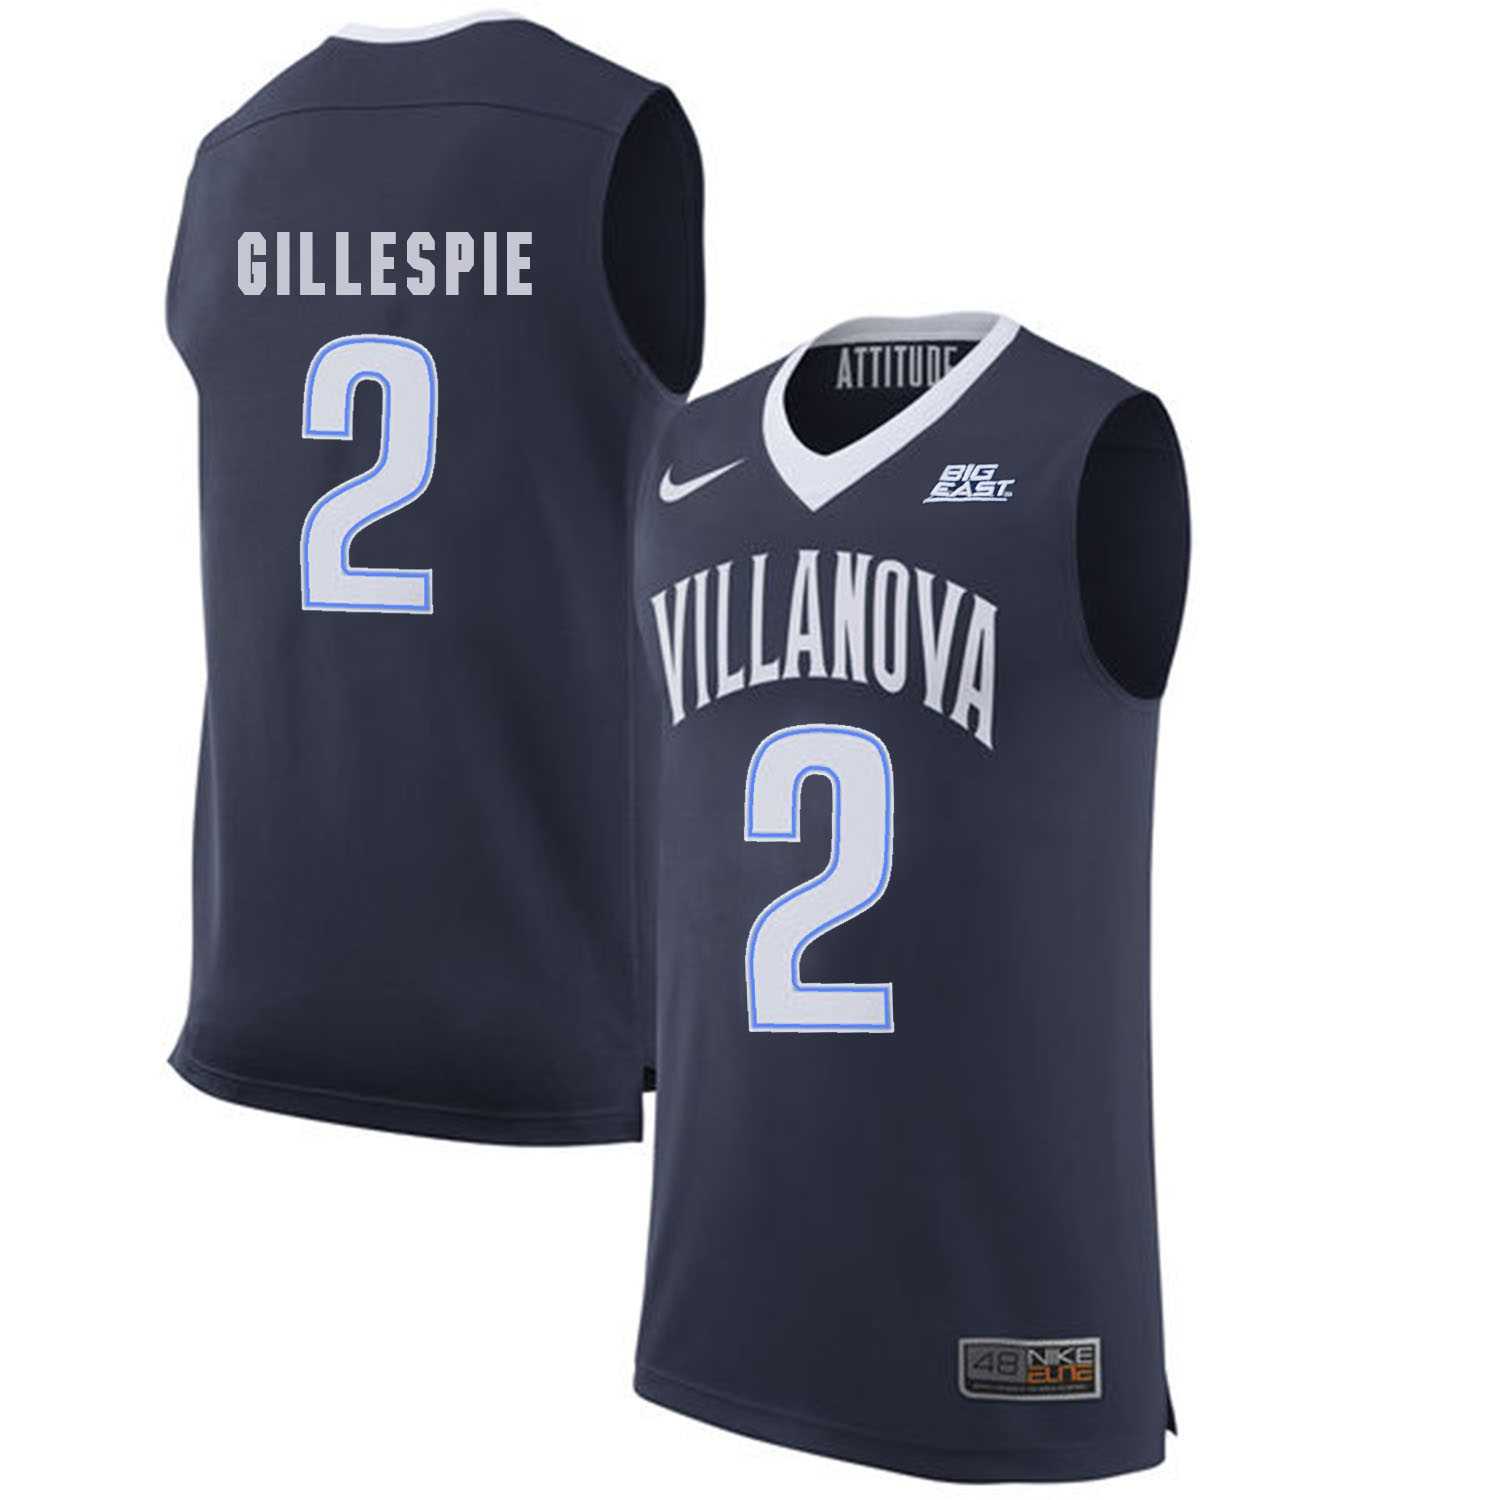 Villanova Wildcats #2 Collin Gillespie Navy College Basketball Elite Jersey